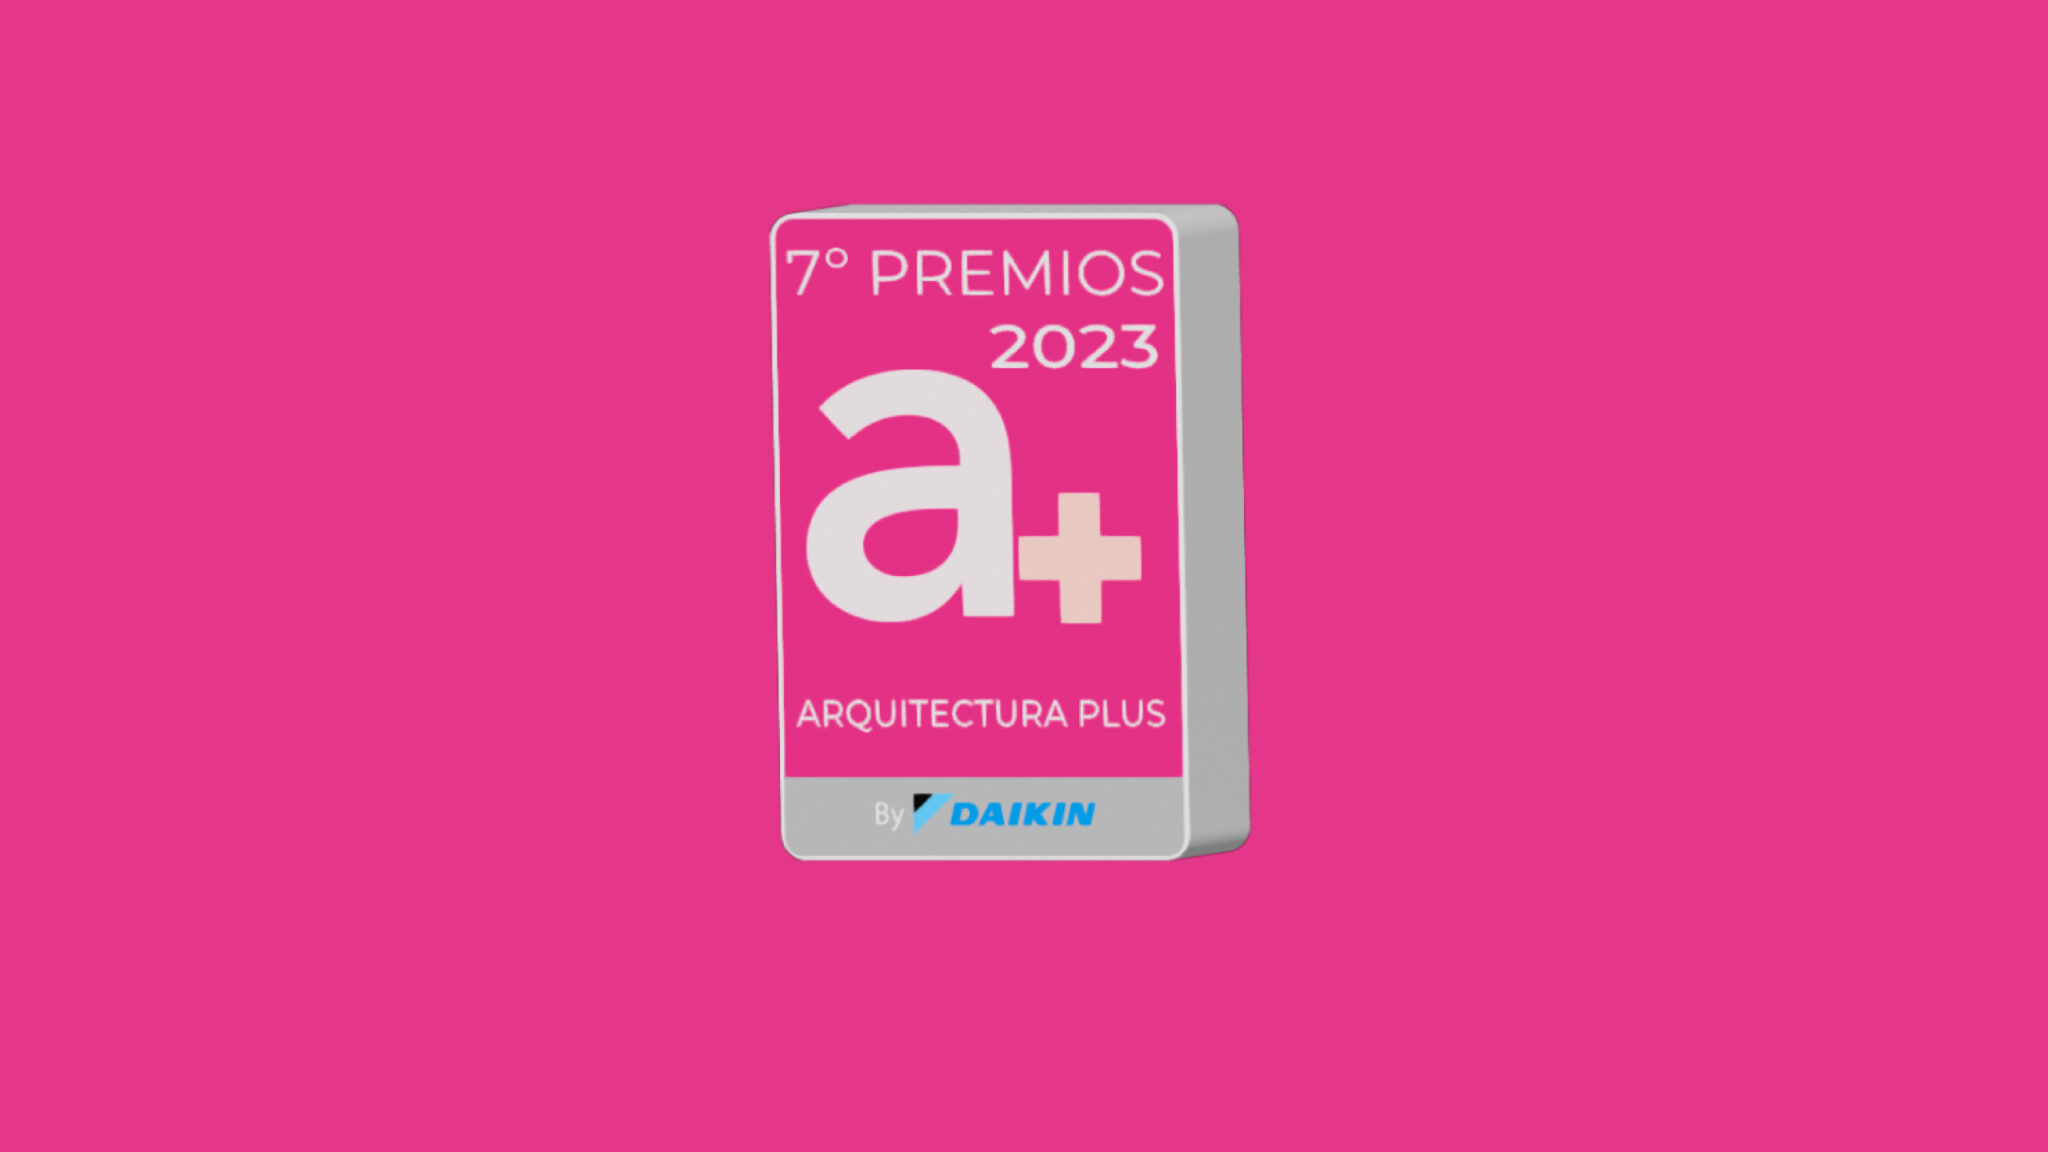 Premios Arquitectura Plus by Daikin 2023